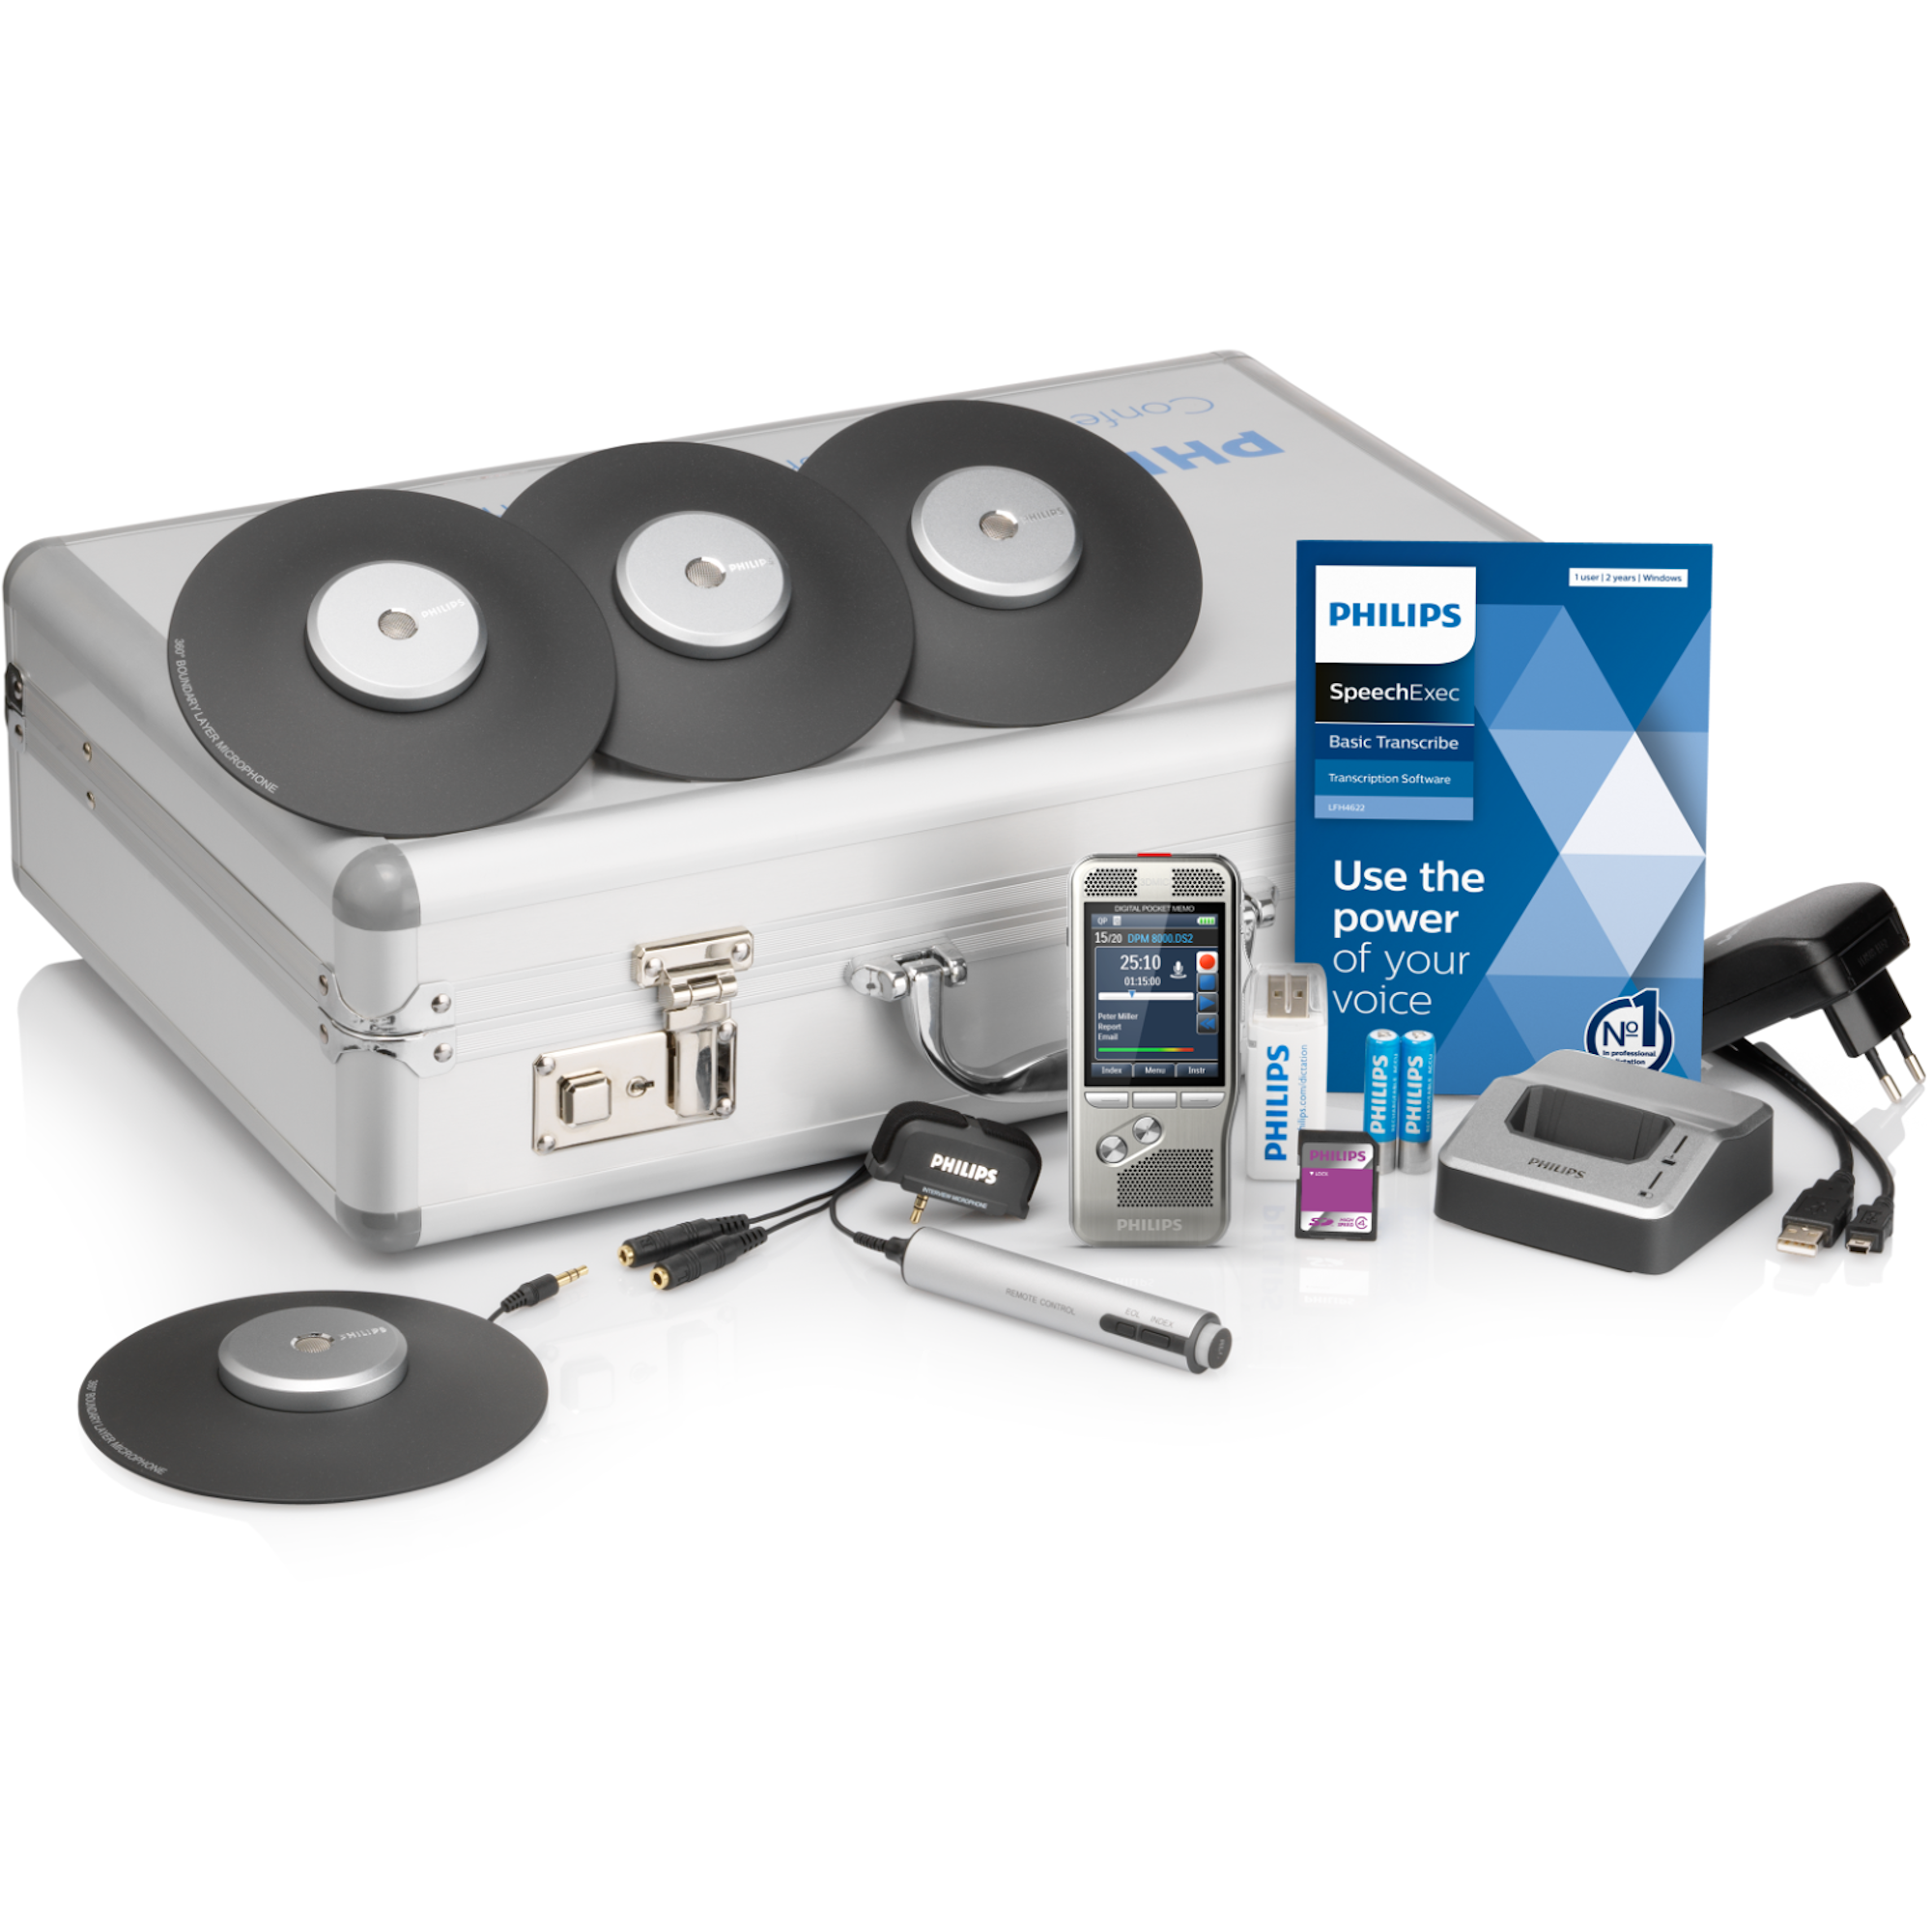 Philips PocketMemo Vergaderrecorder DPM8900/02, 4x 360° microfoon/32 pers., accessoires, metale draagkoffer, SpeechExec Basic Dictate 11, 2-jaar licentie